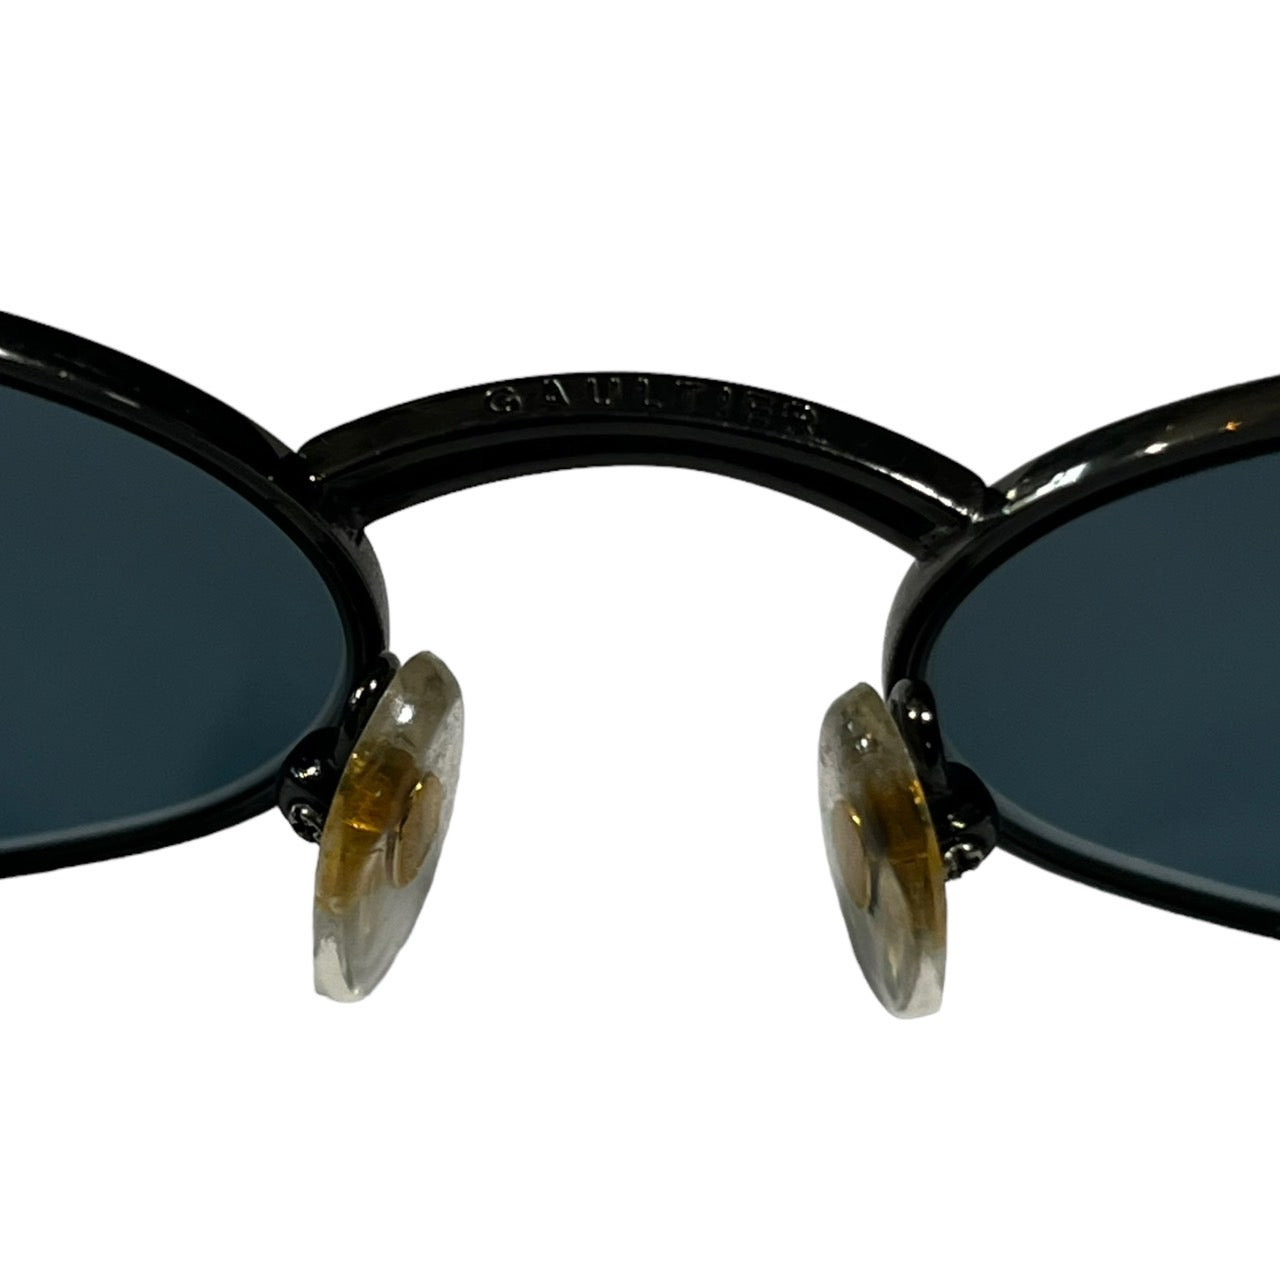 Jean Paul GAULTIER(ジャンポールゴルチエ) 90’s belt temple sunglasses/ベルトテンプルサングラス/メガネ/眼鏡 56-0020 表記無し シルバーフレーム/スモークレンズ